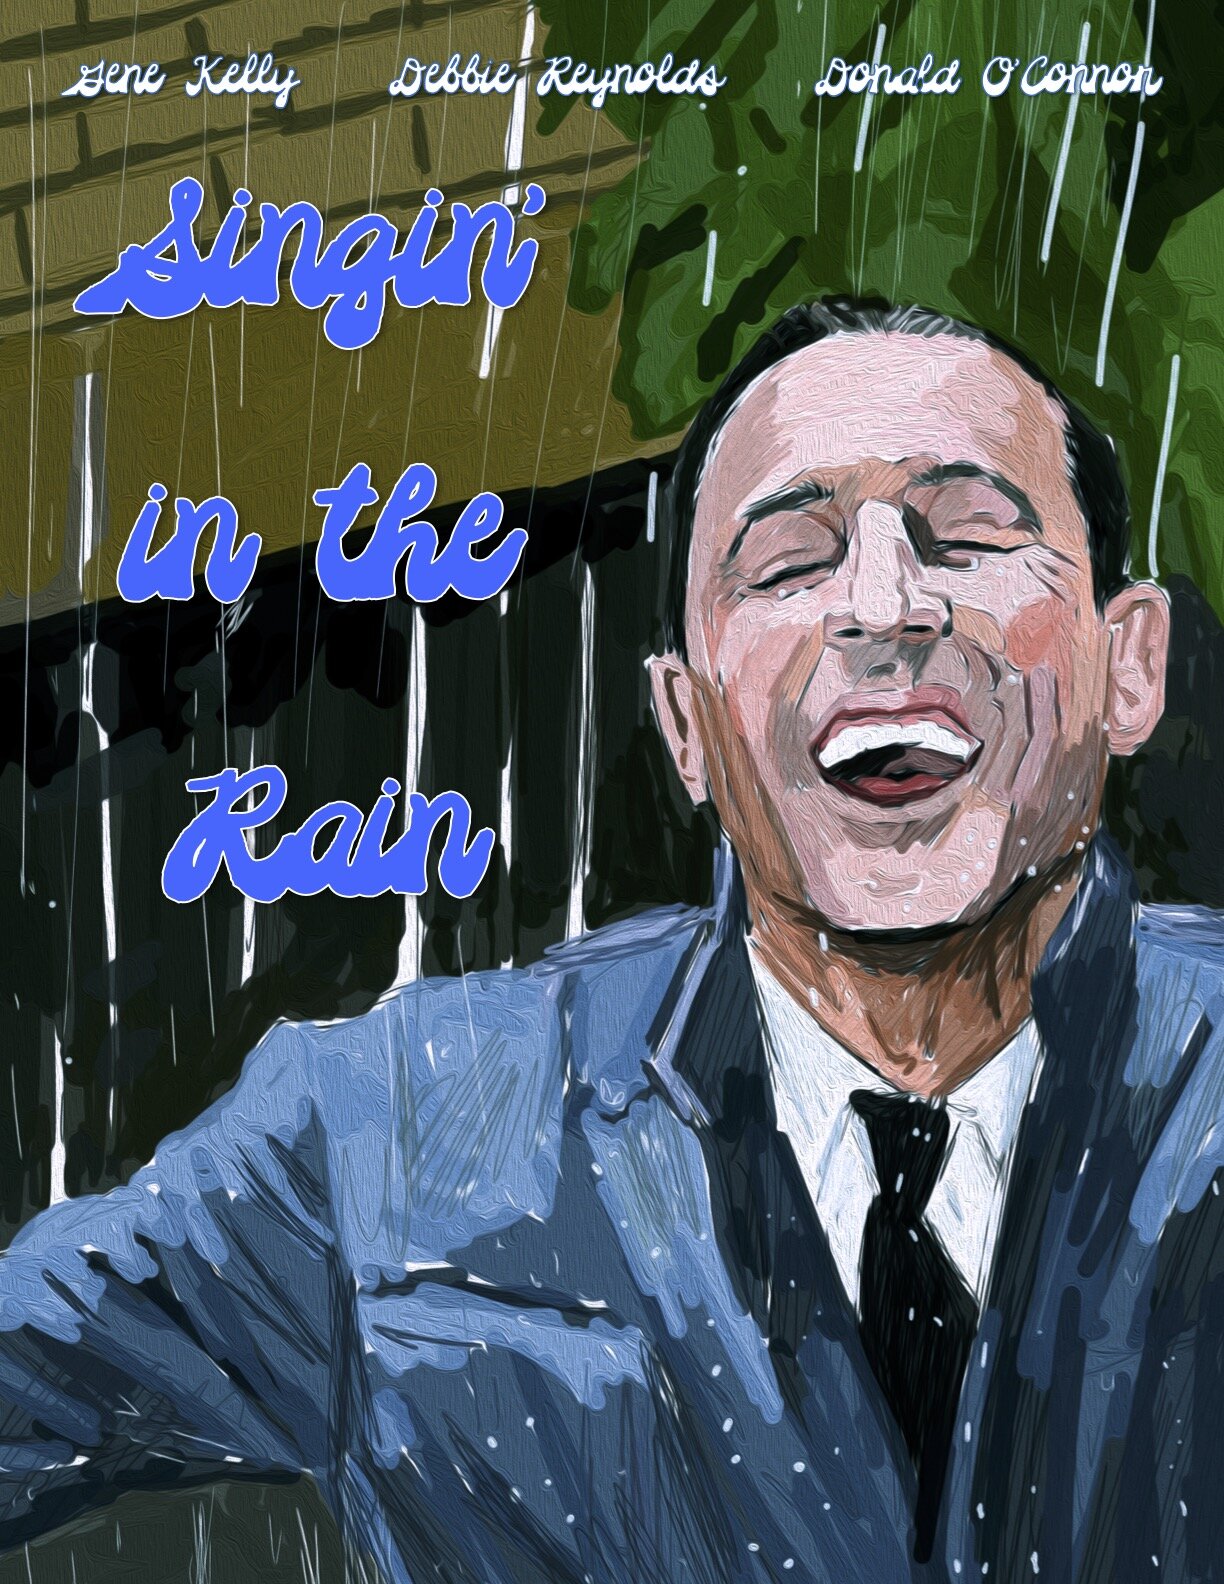 Singin' In the Rain (1952)